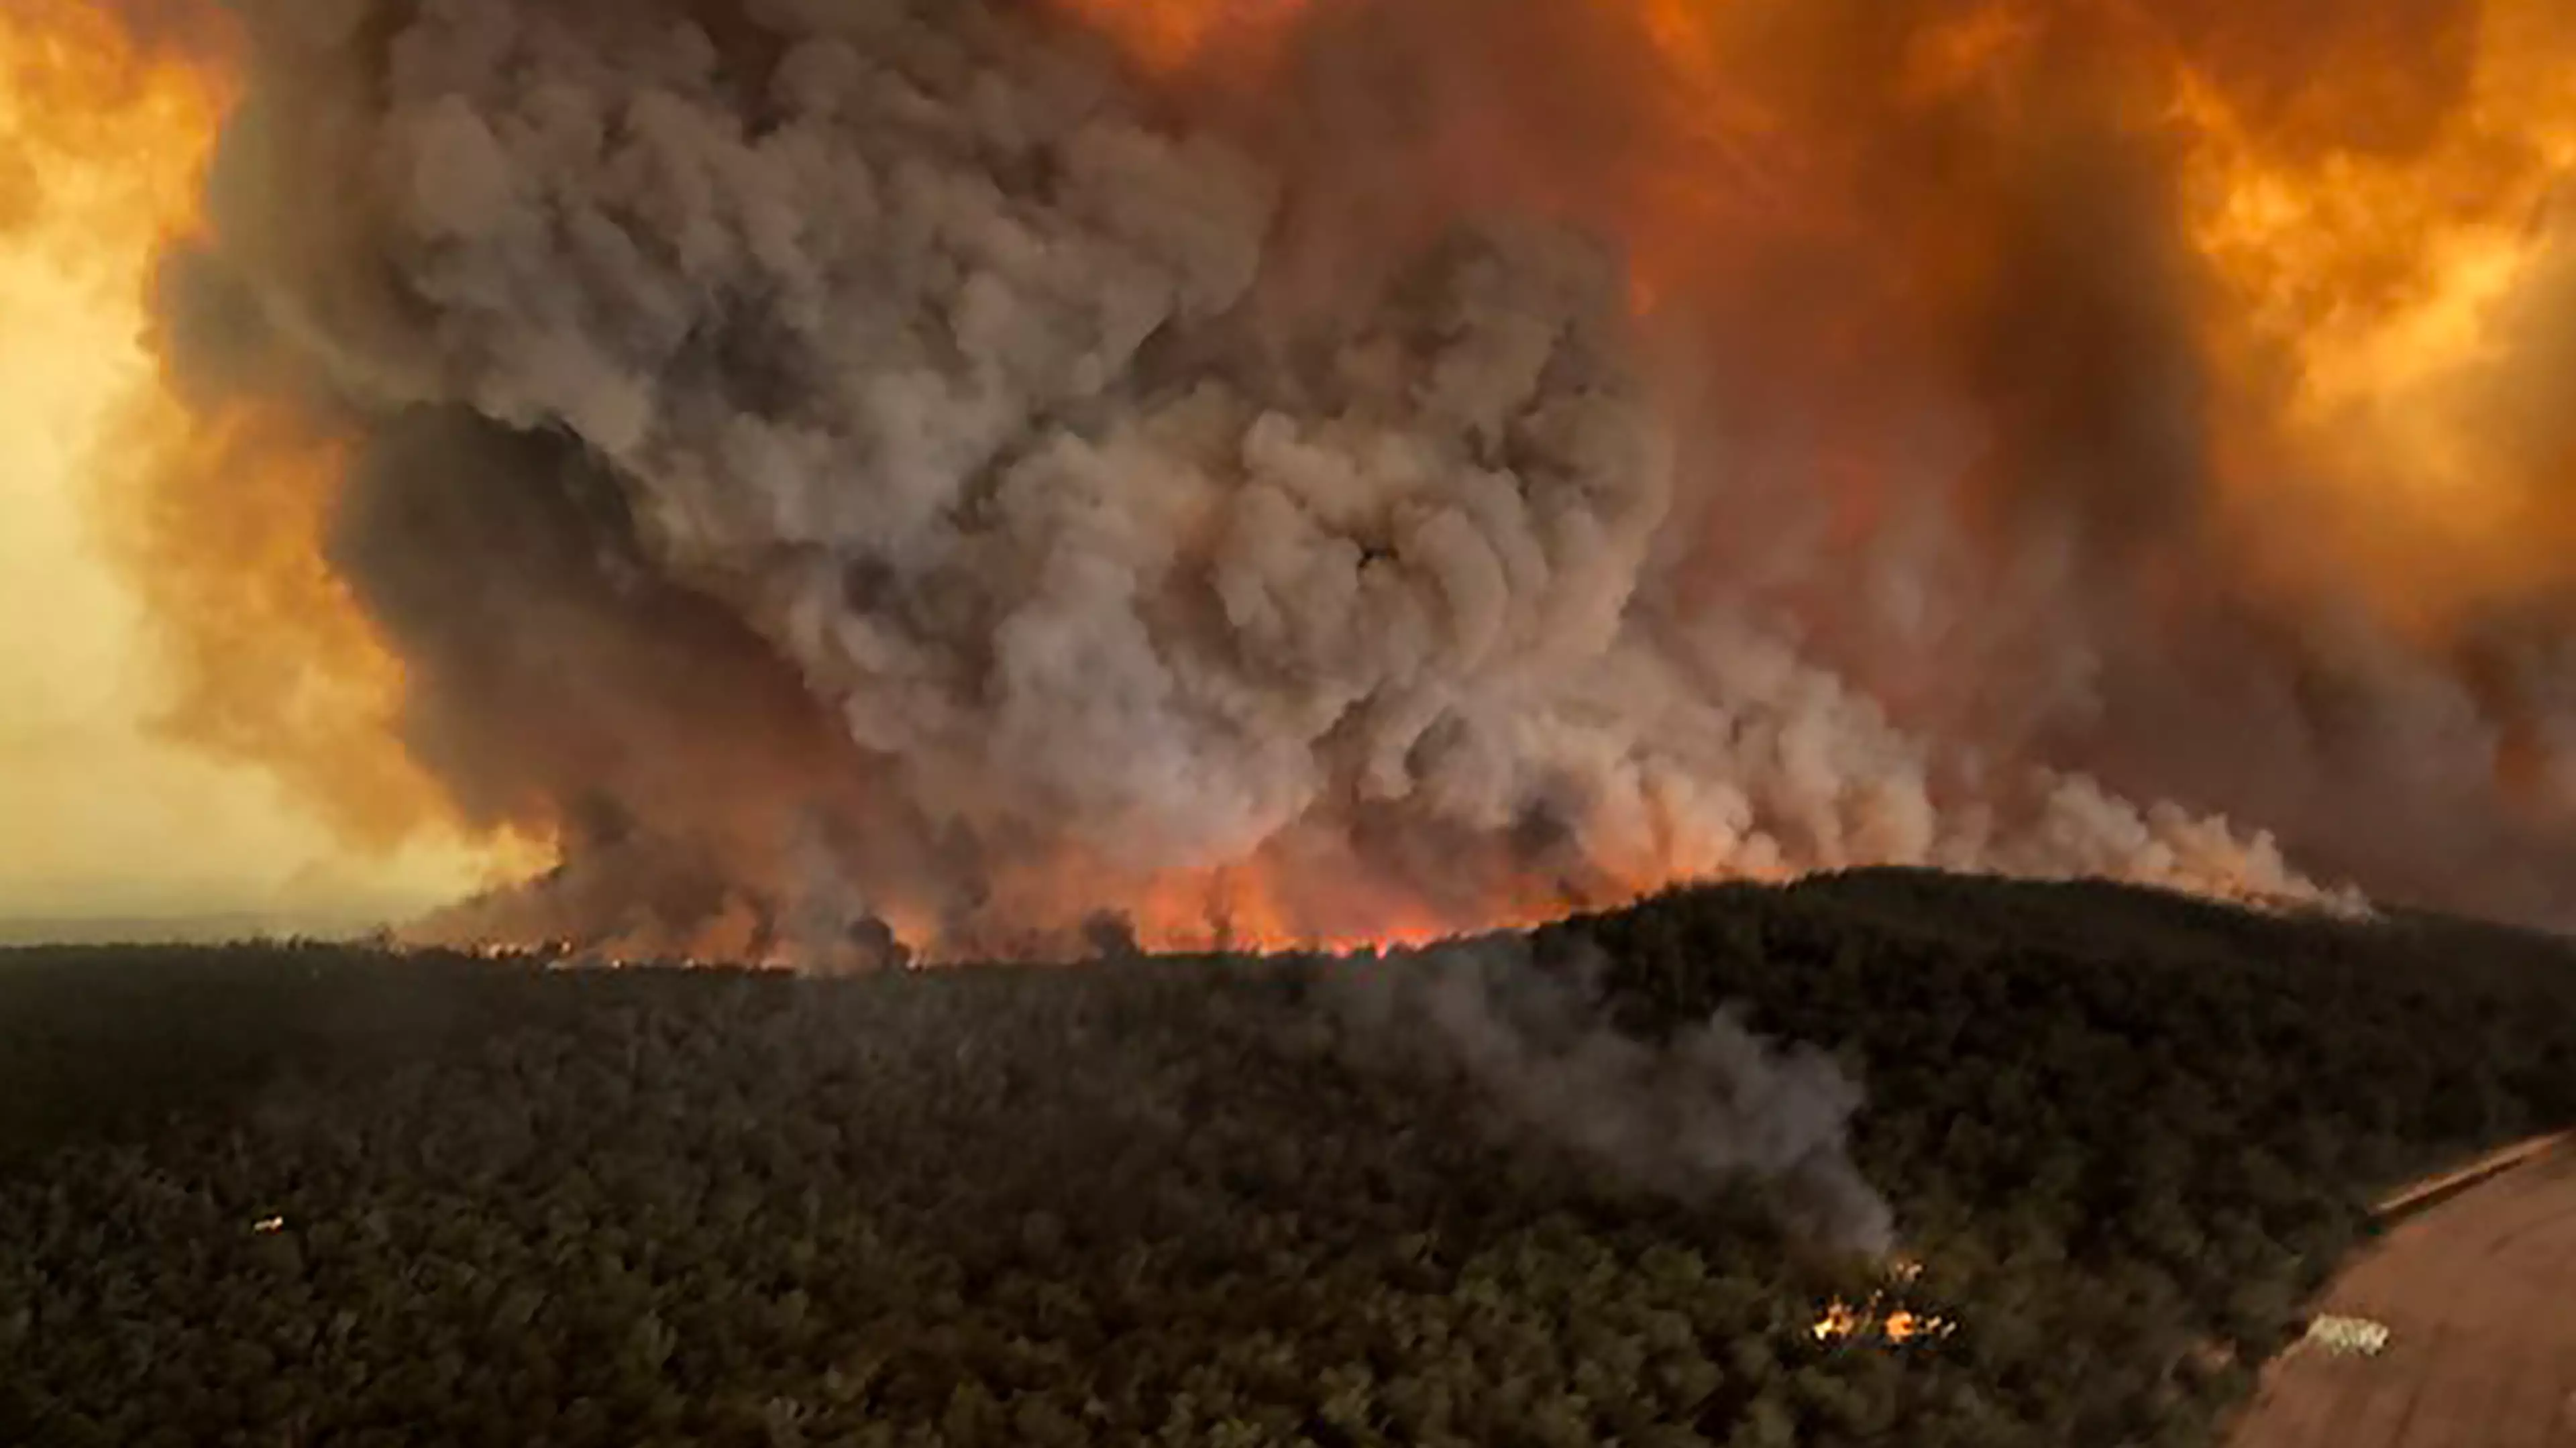 Chris Hemsworth Is Donating £520k To Help Fight Aussie Wildfires